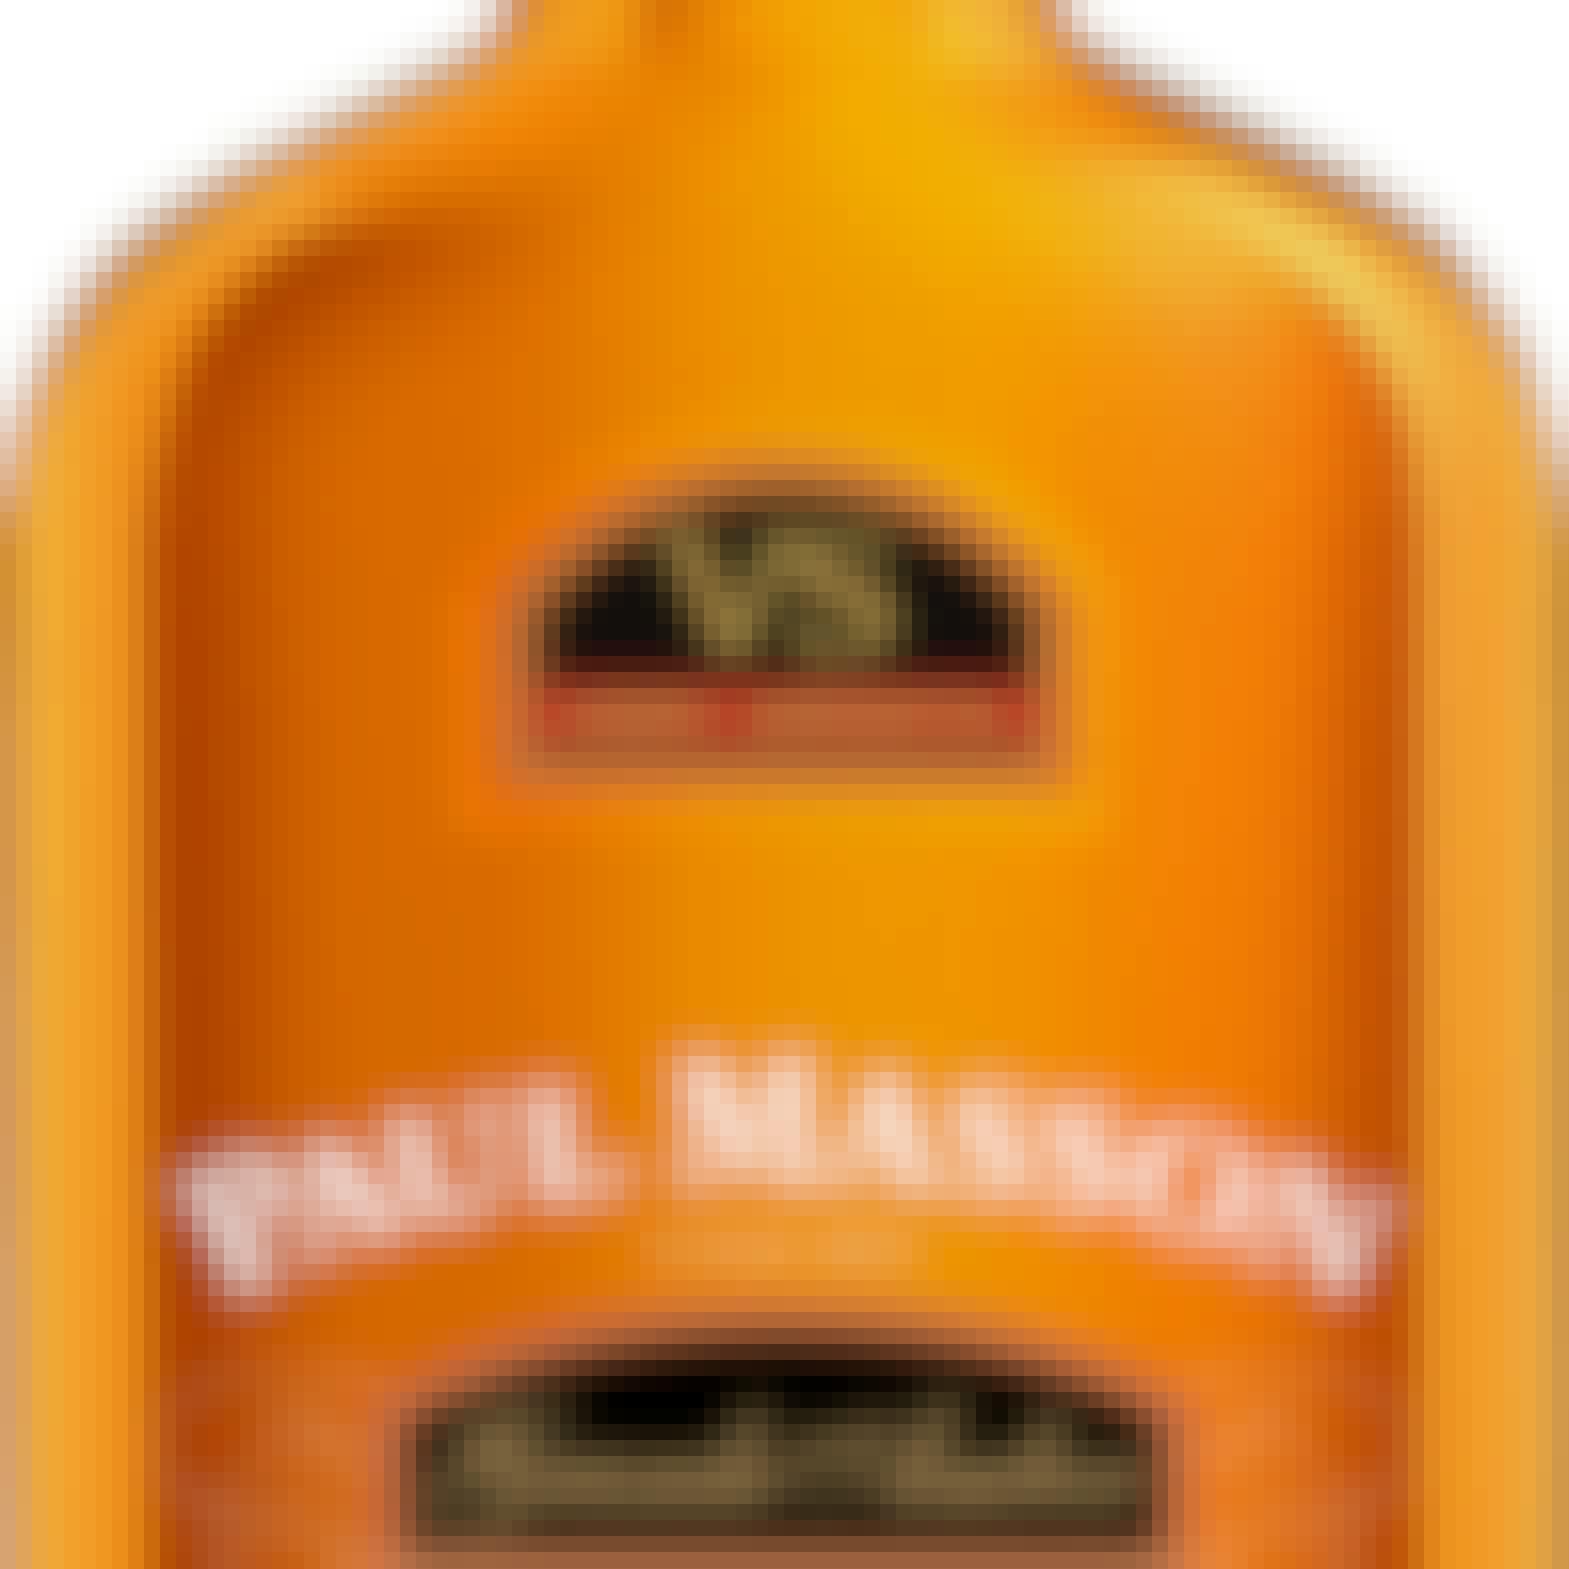 Paul Masson Grande Amber VS Brandy 375ml